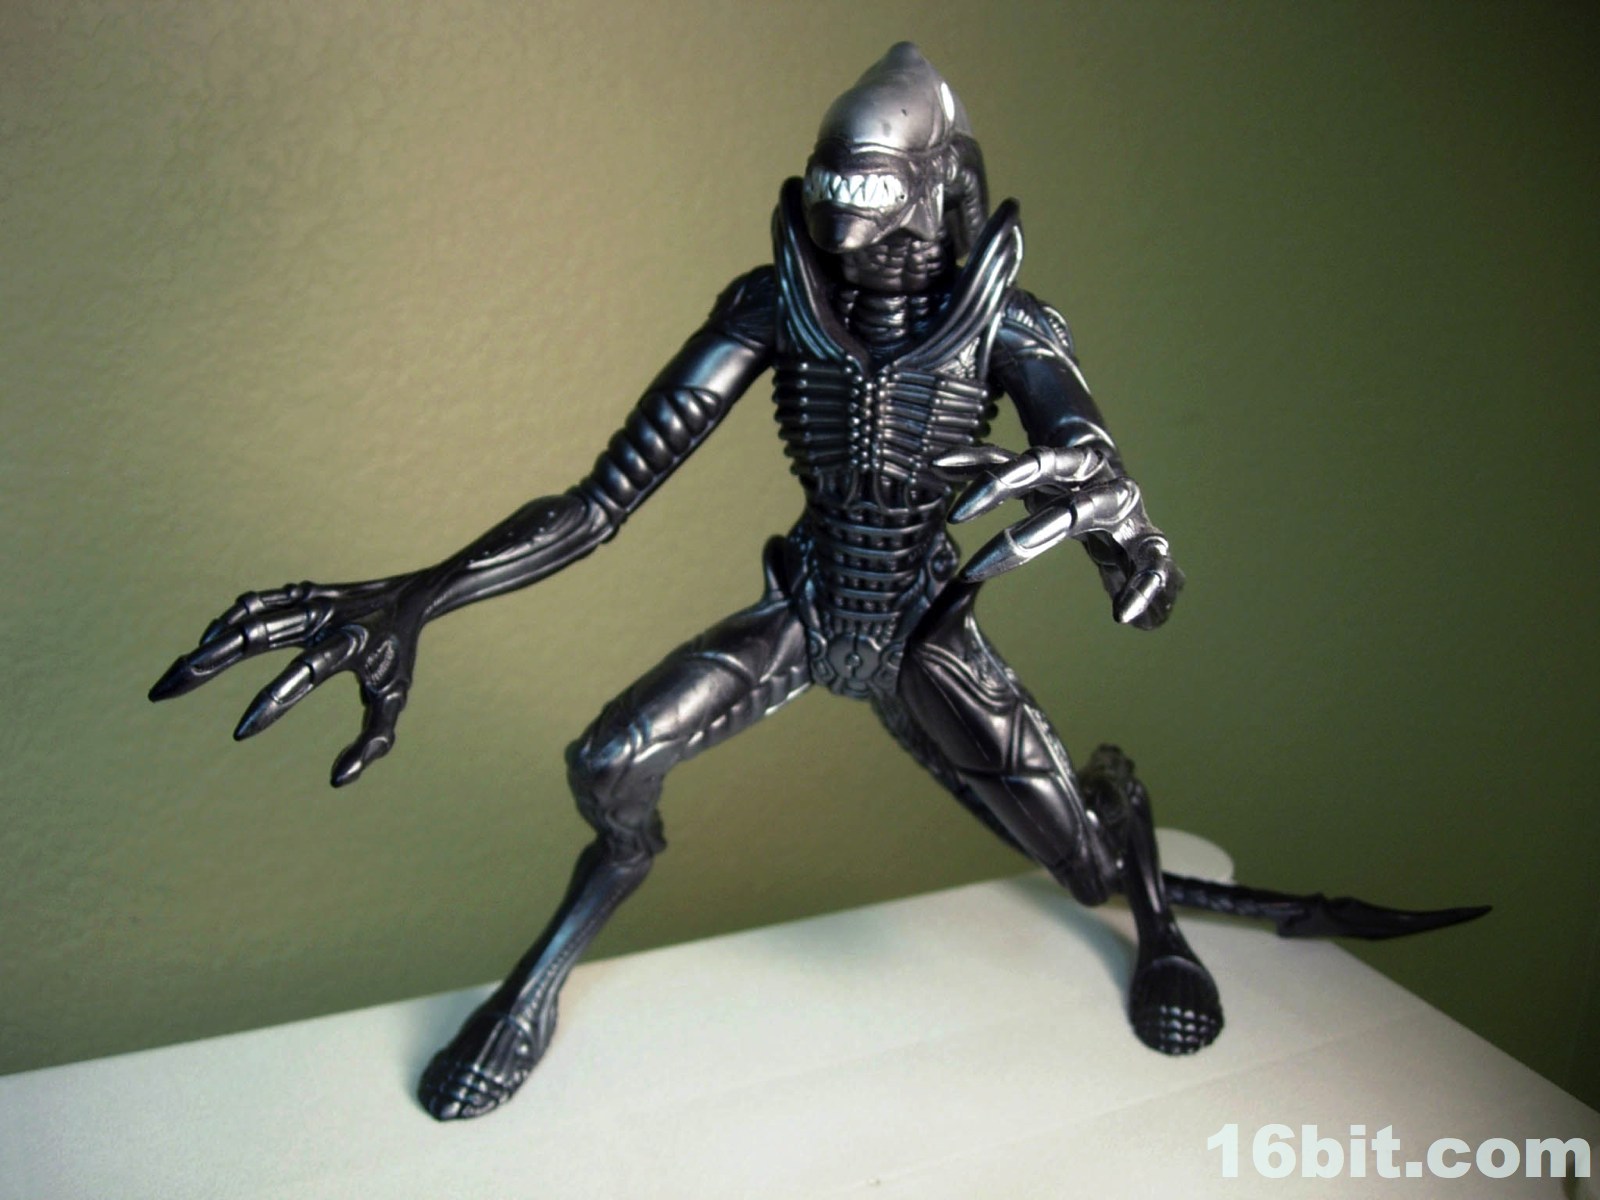 Alien vs. Predator Series 2 Set - Entertainment Earth